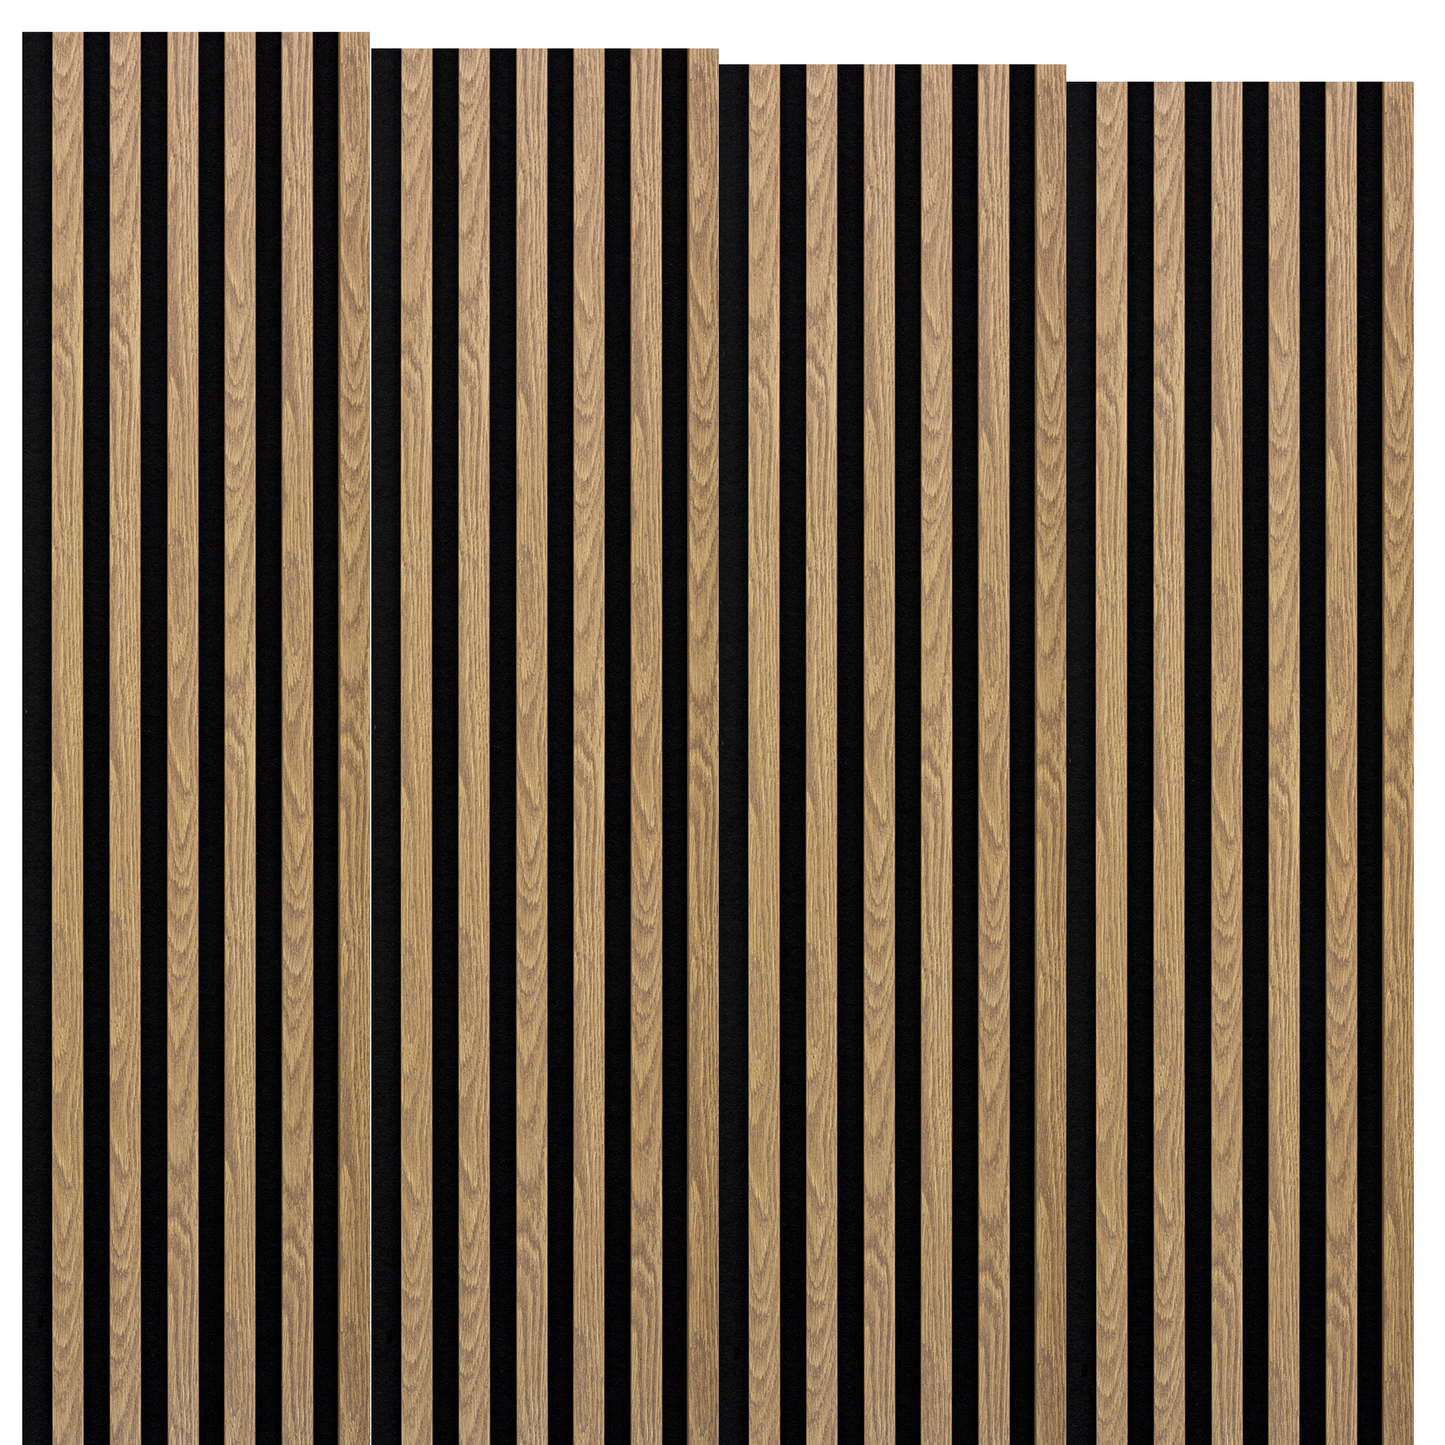 Marbet Design Woodline - Light Oak Lamella Panel on Black Felt - 2700 x 300 mm